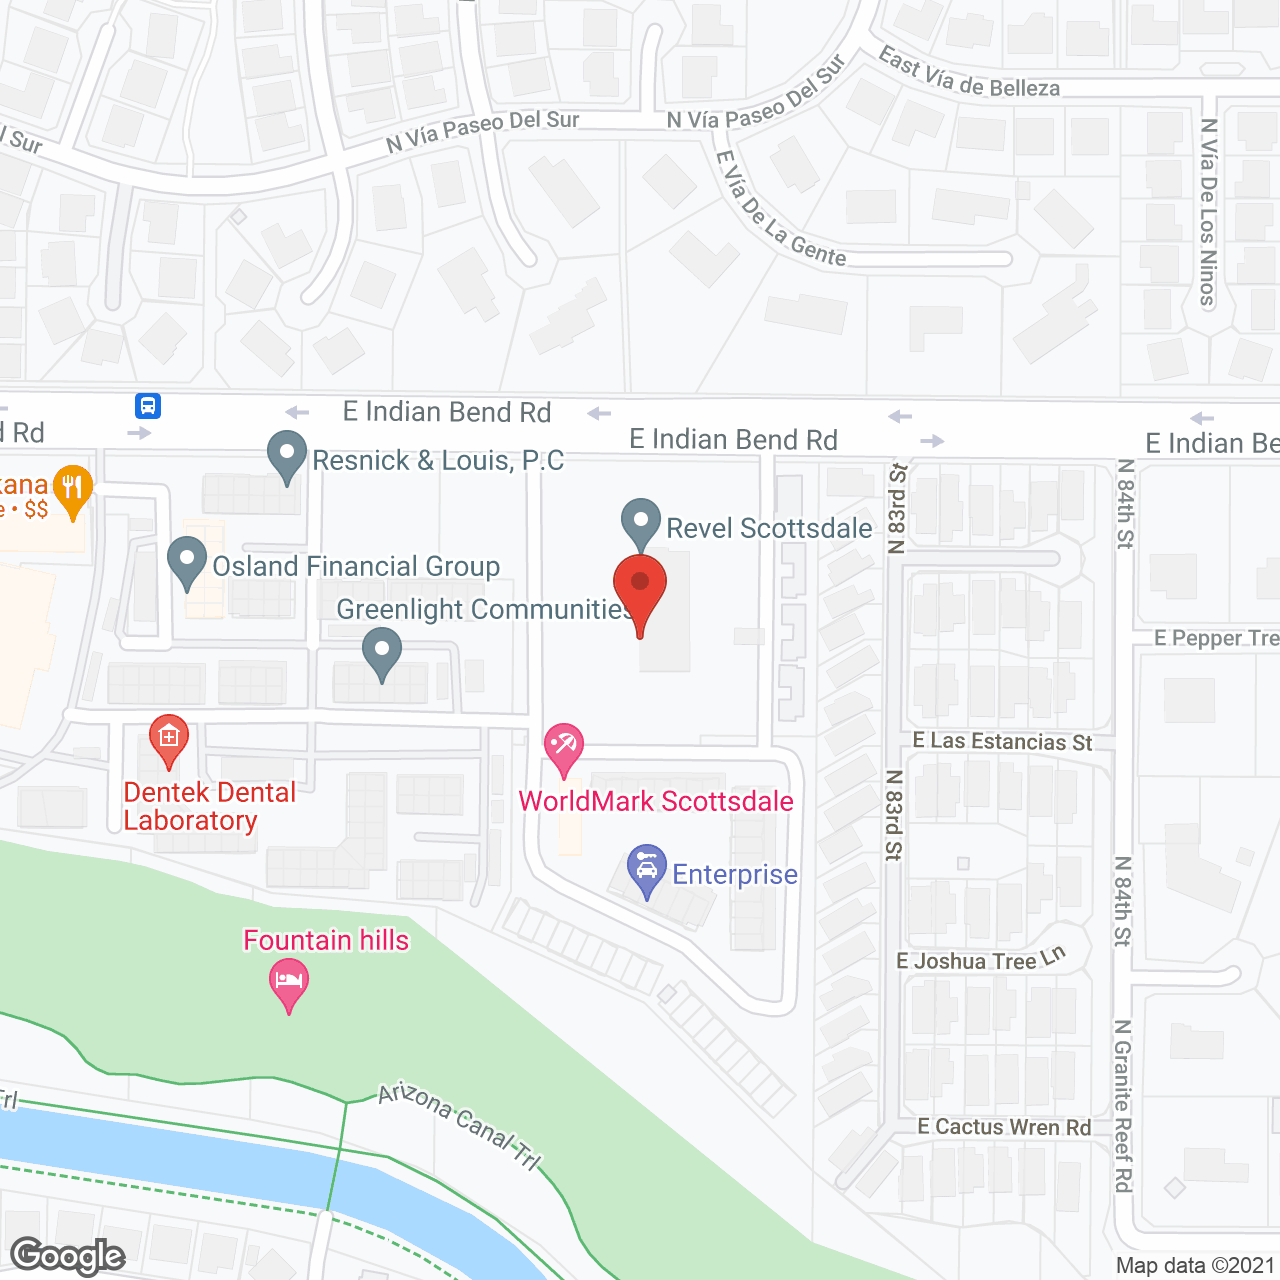 Revel Scottsdale in google map